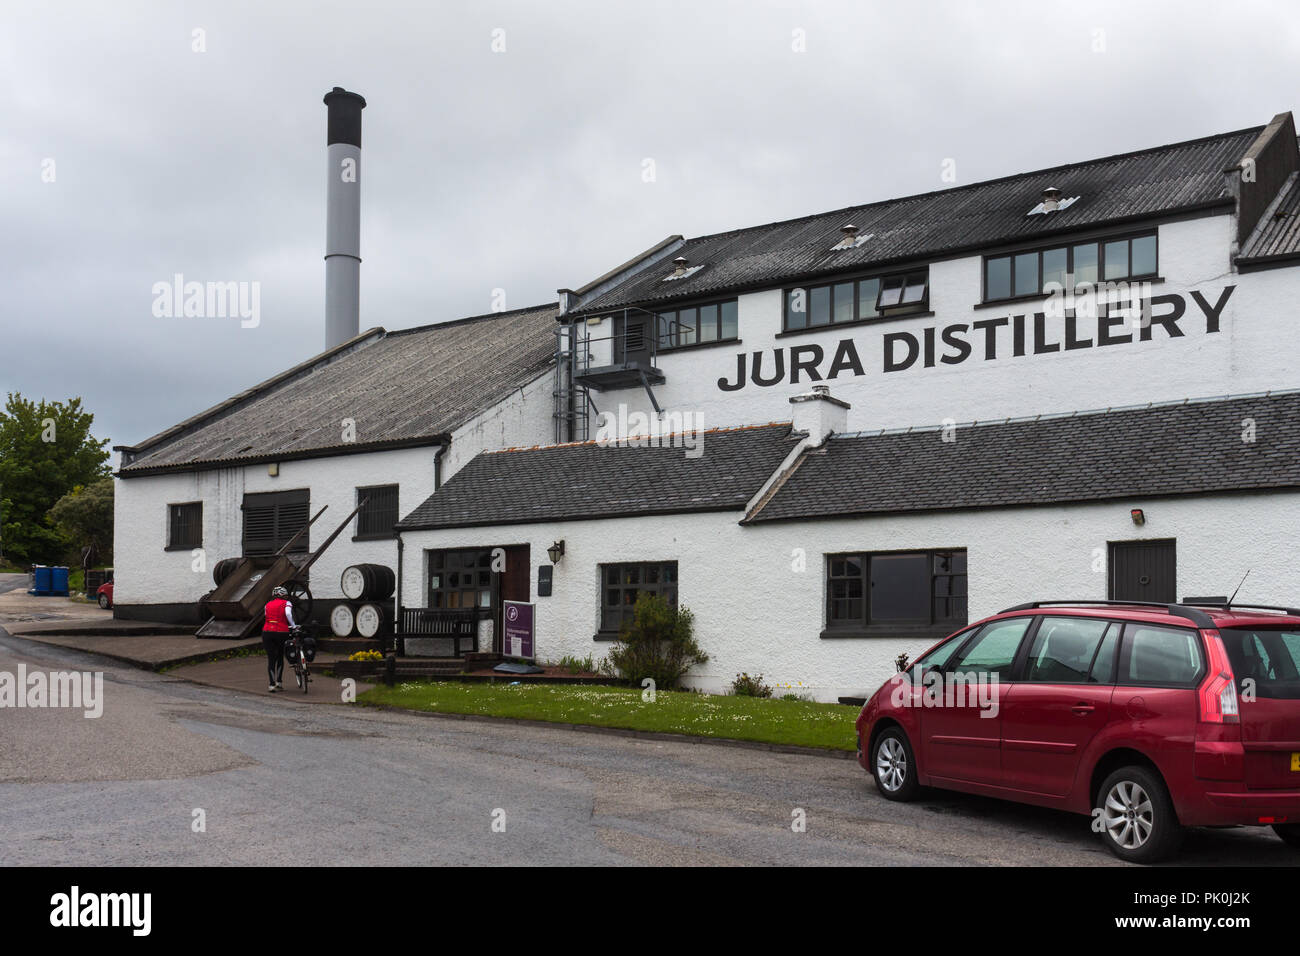 Jura Distillery, Craighouse, Jura, Scotland. Stock Photo